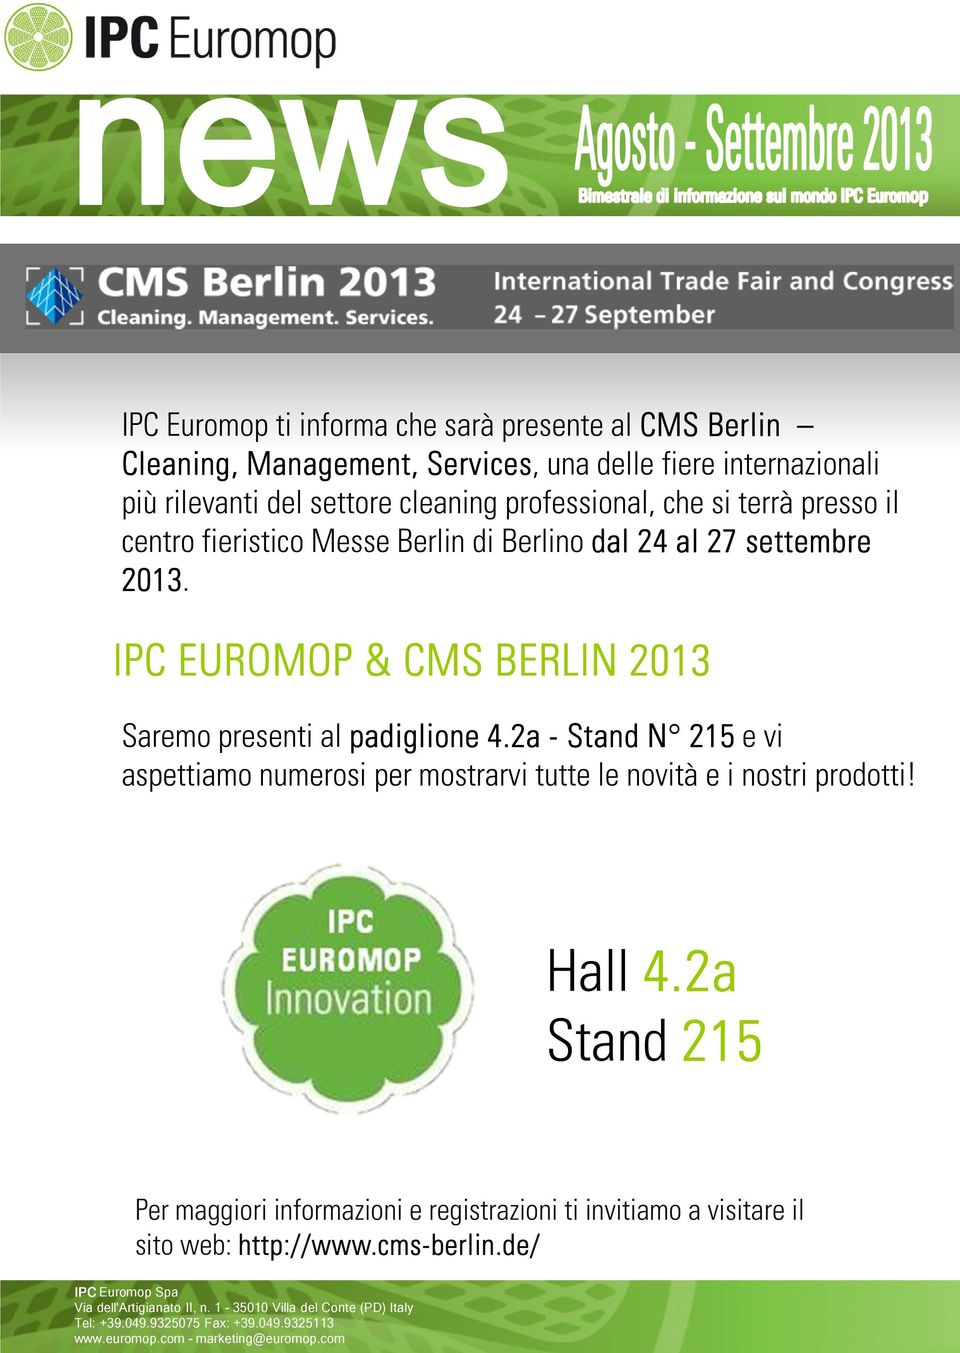 IPC EUROMOP & CMS BERLIN 2013 Saremo presenti al padiglione 4.